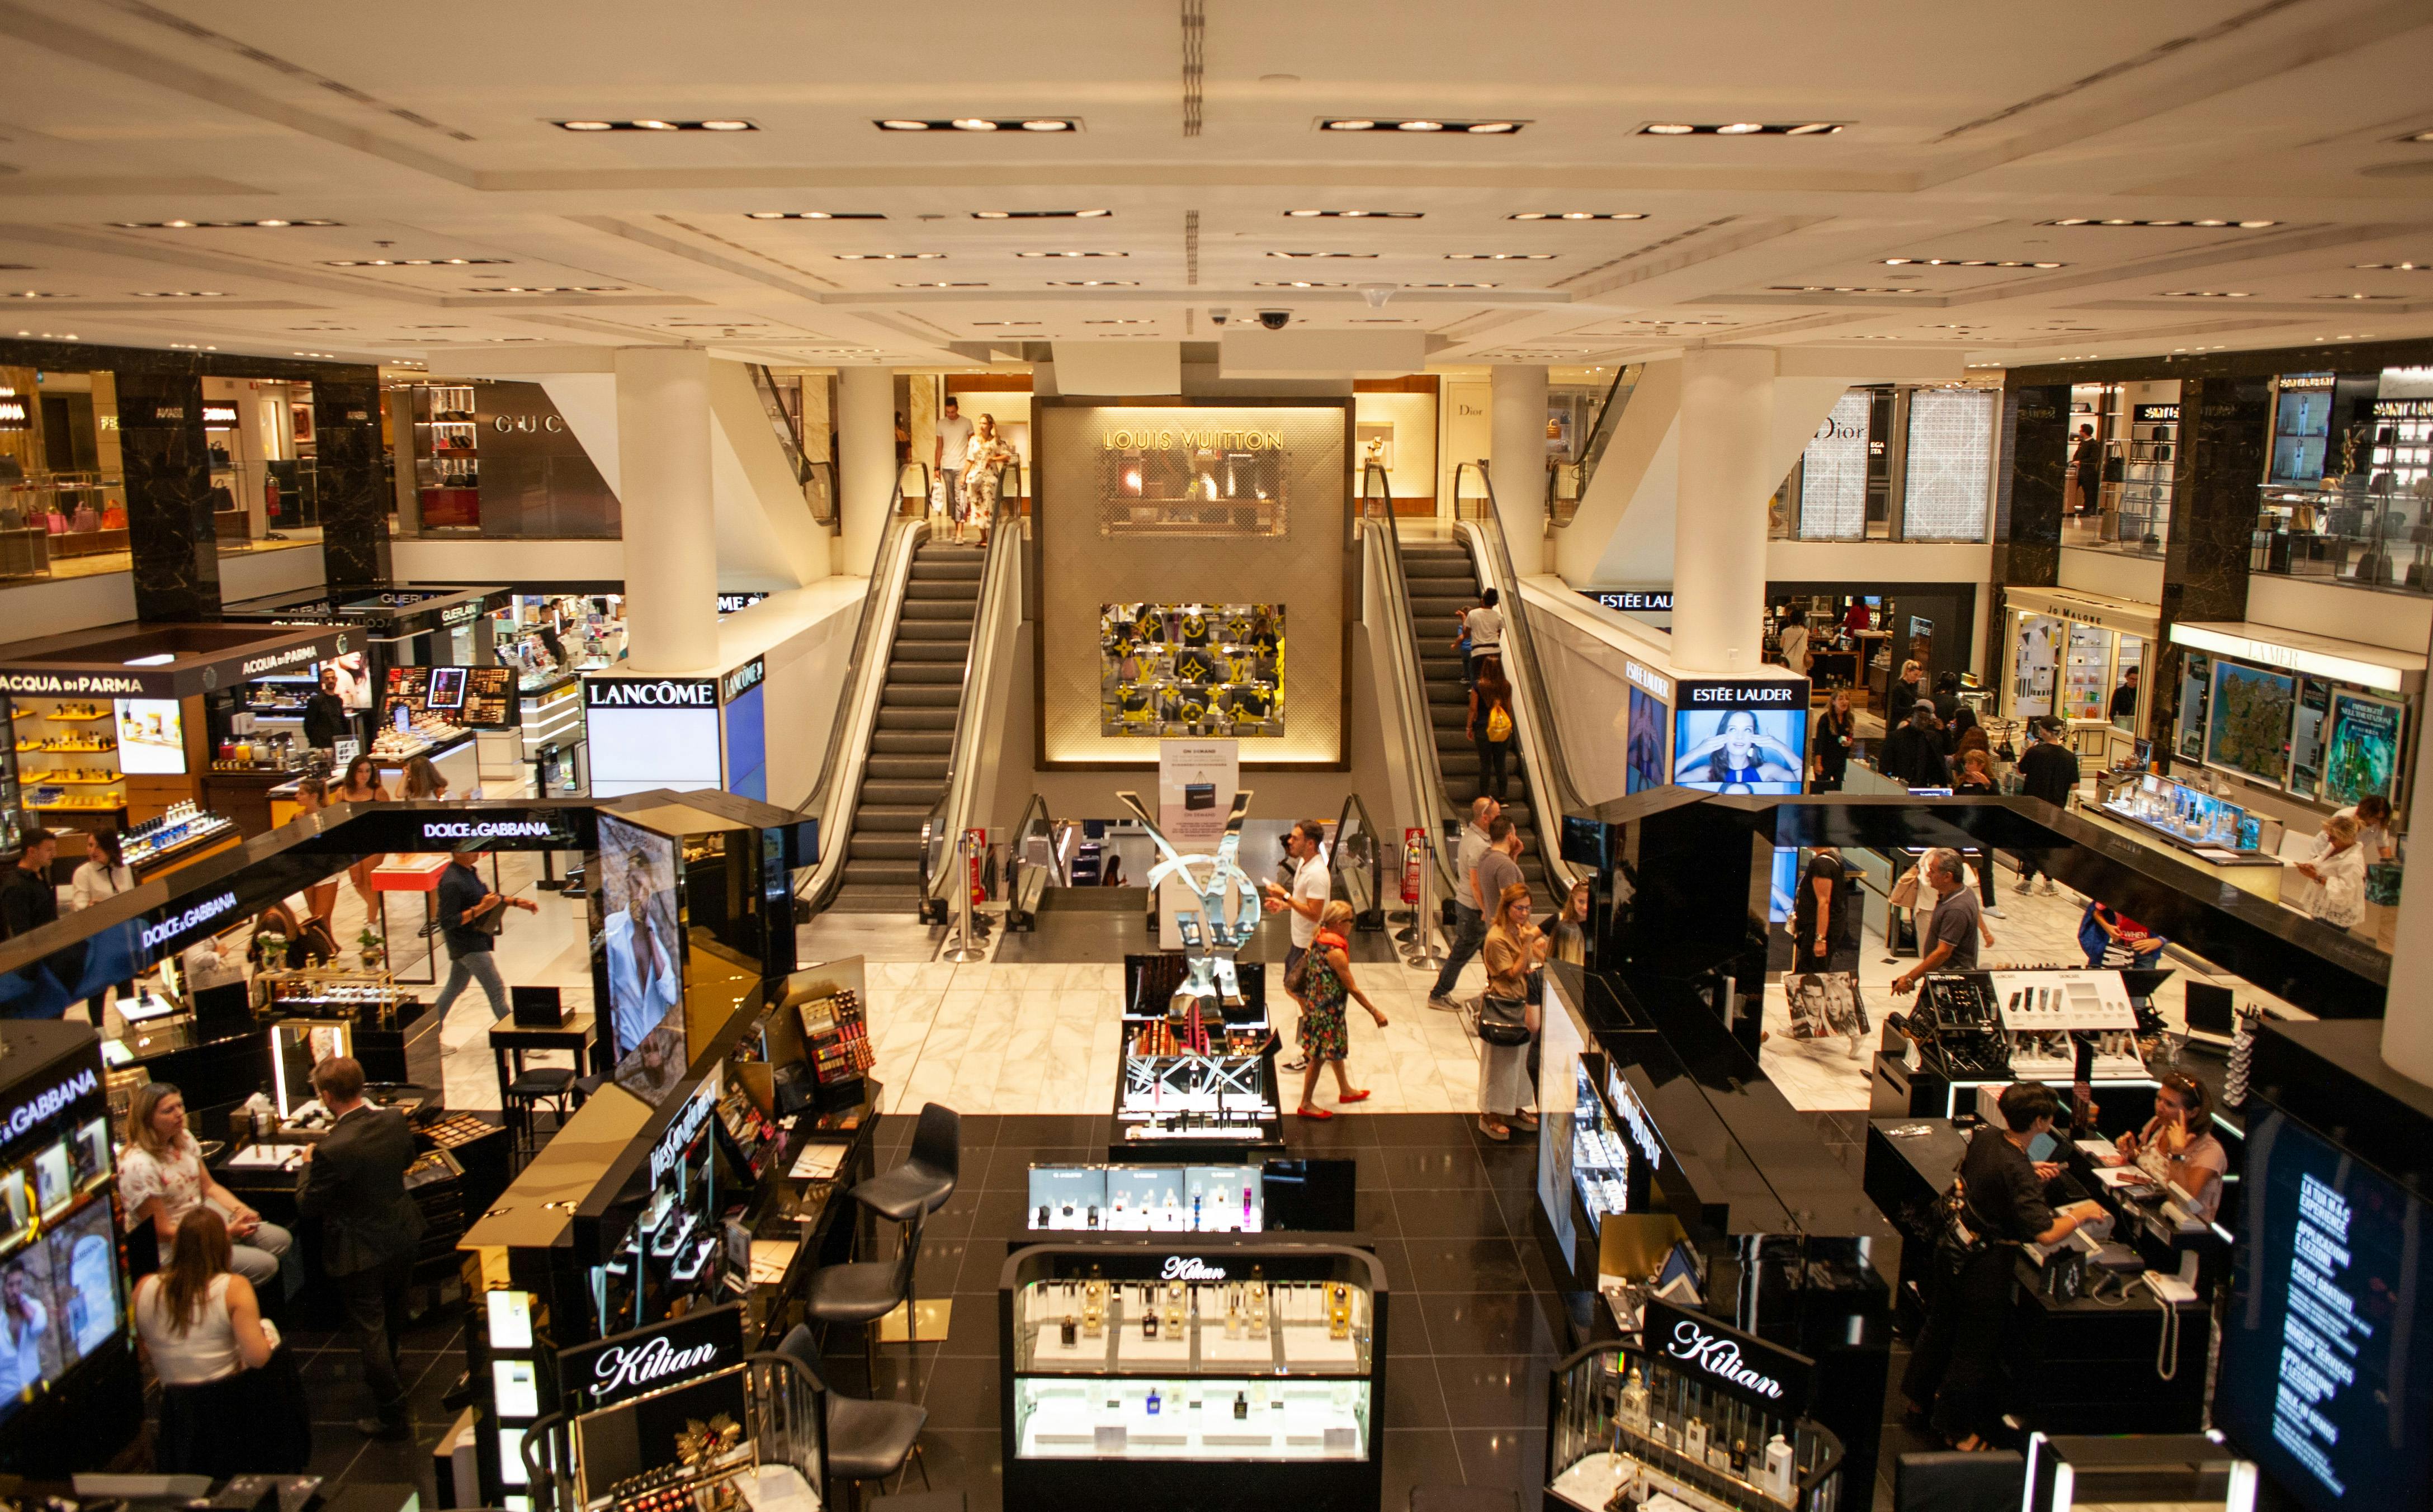 inside shopping malls